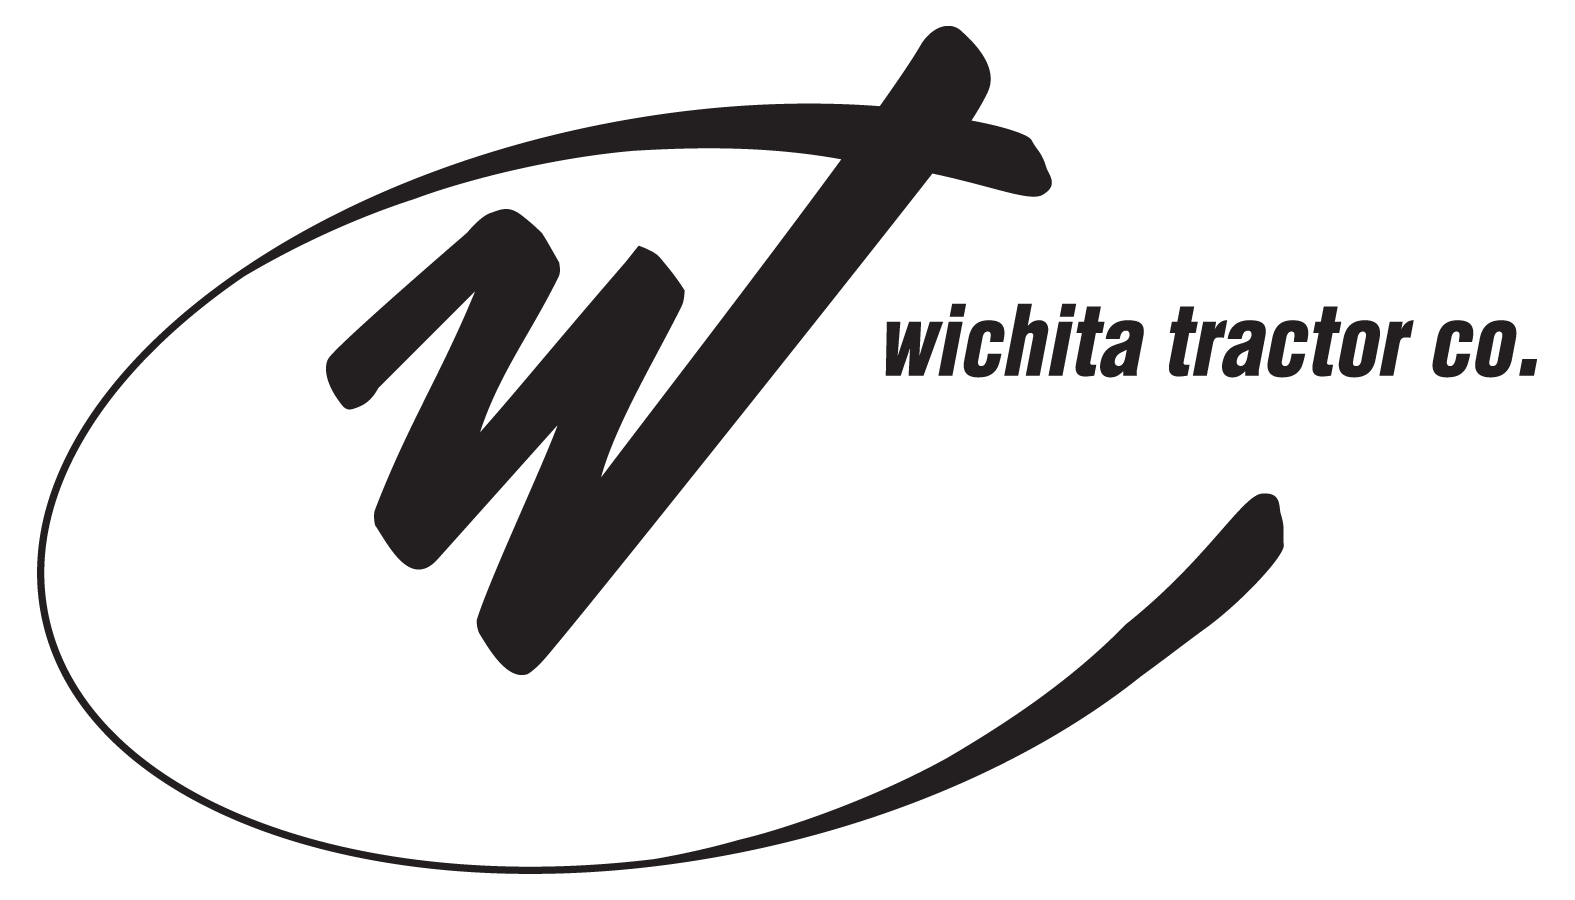 Wichita Tractor Co. Logo